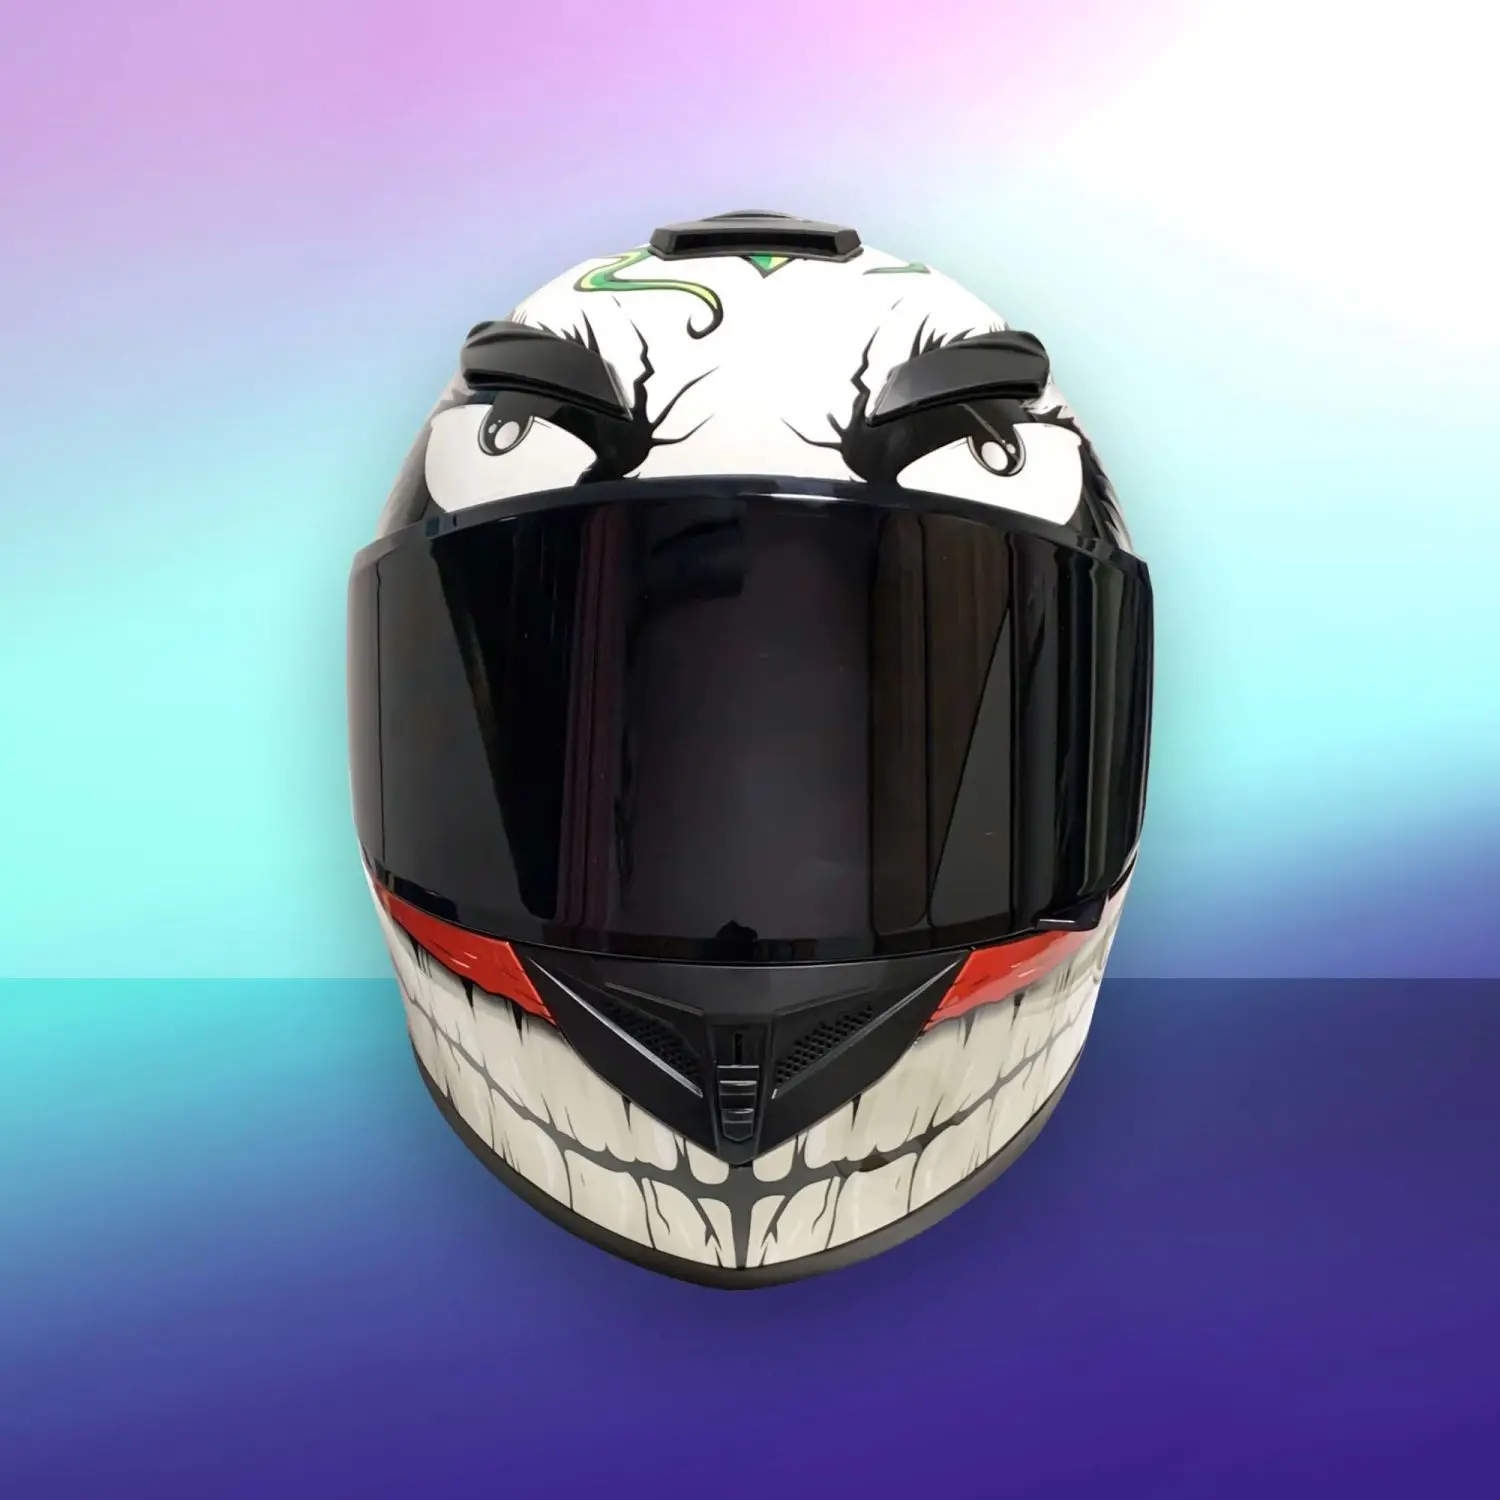 Joker Helmet Motorcycle Helmets Full Face Motorbike Biker Accessories Motocross Enduro Motoomami Racing Men's Free Shipping enlarge